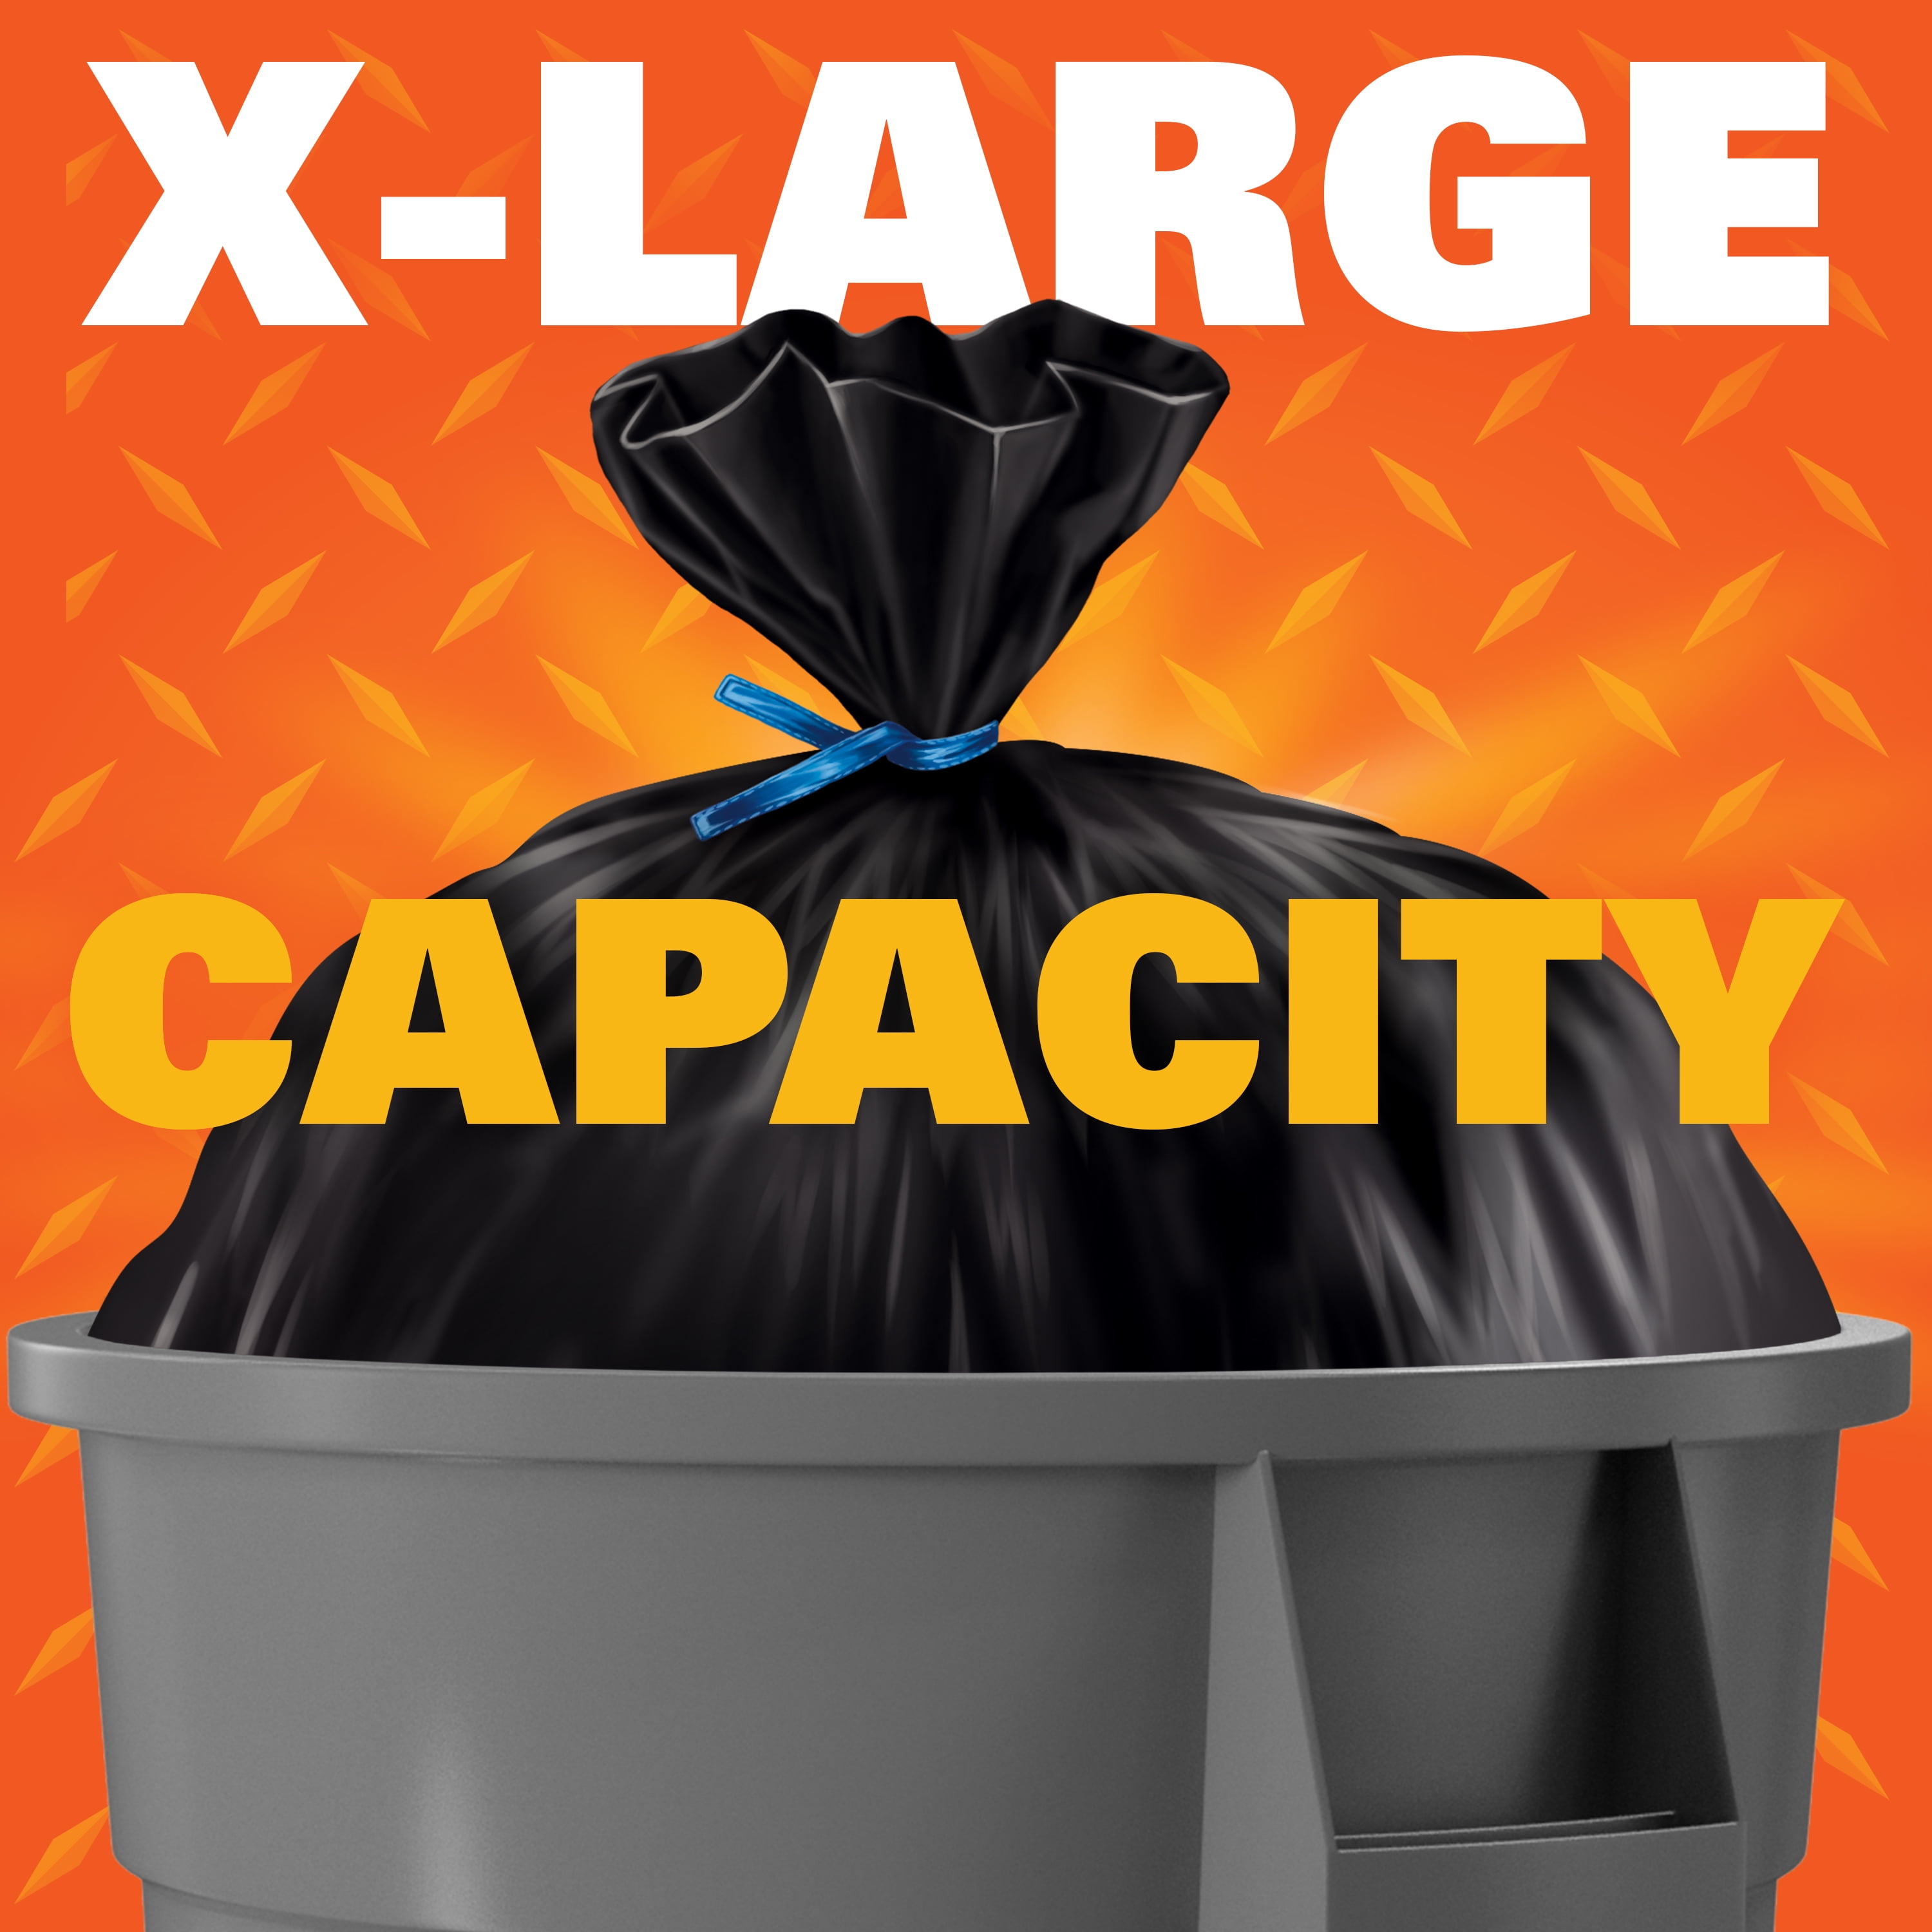 45 Gallon Trash Bags 3 MIL 25PCS Large Heavy Duty Garbage Rubbish Bags  Black